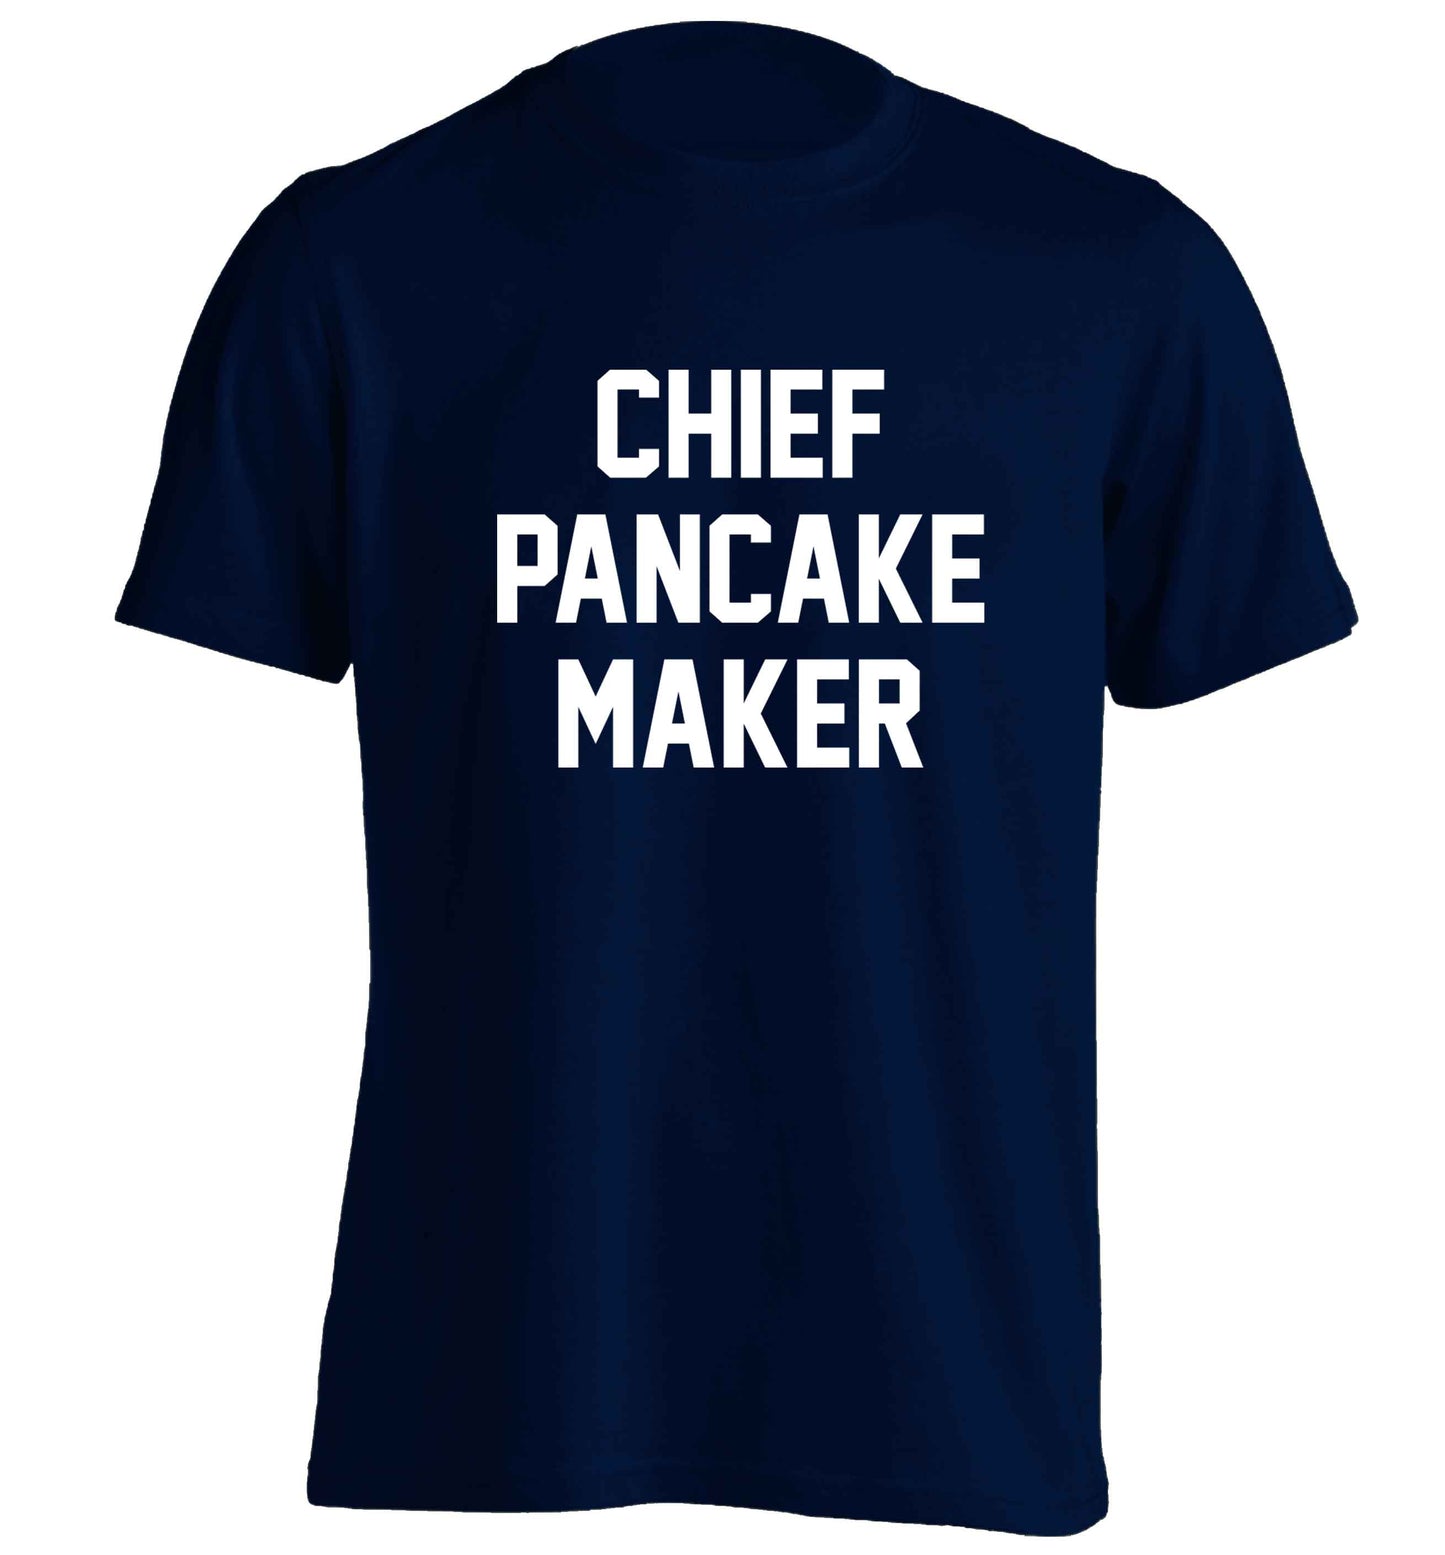 Chief pancake maker adults unisex navy Tshirt 2XL